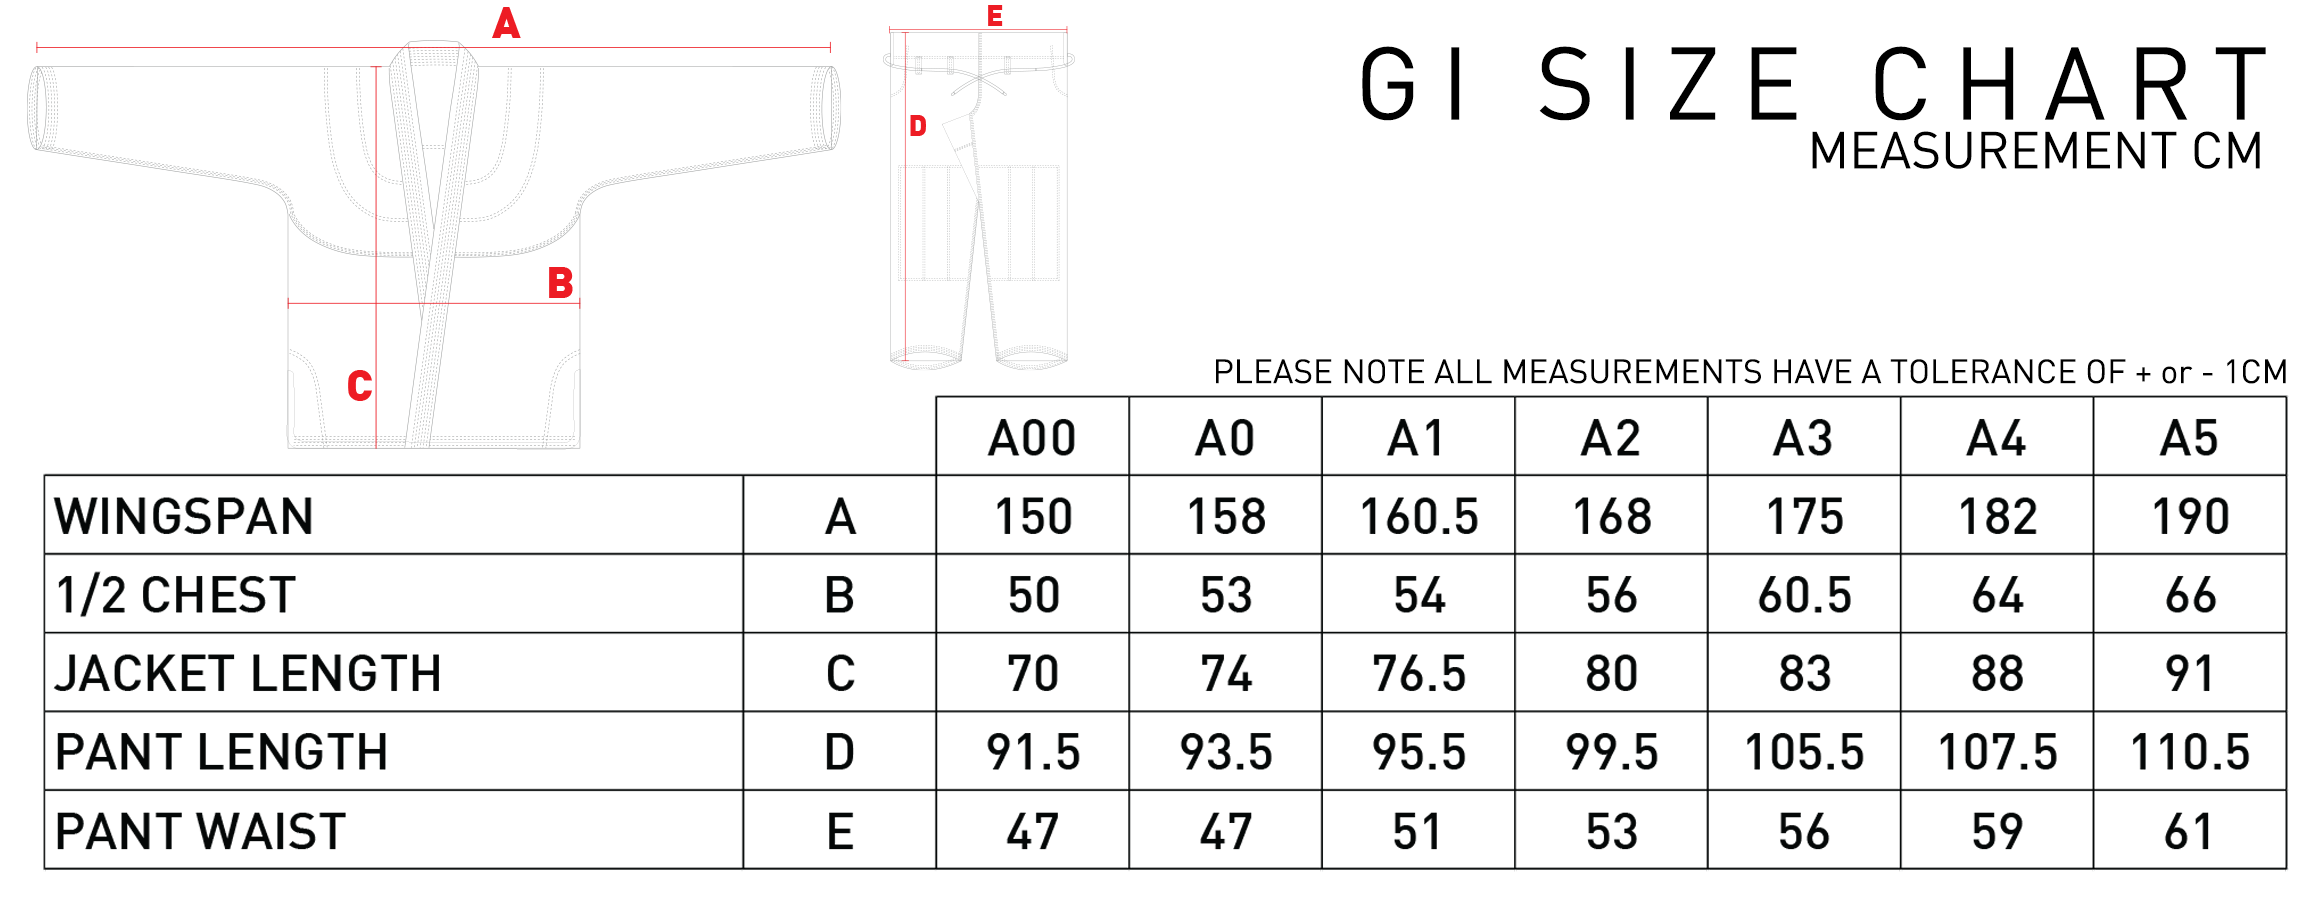 Adult Gi Size Chart